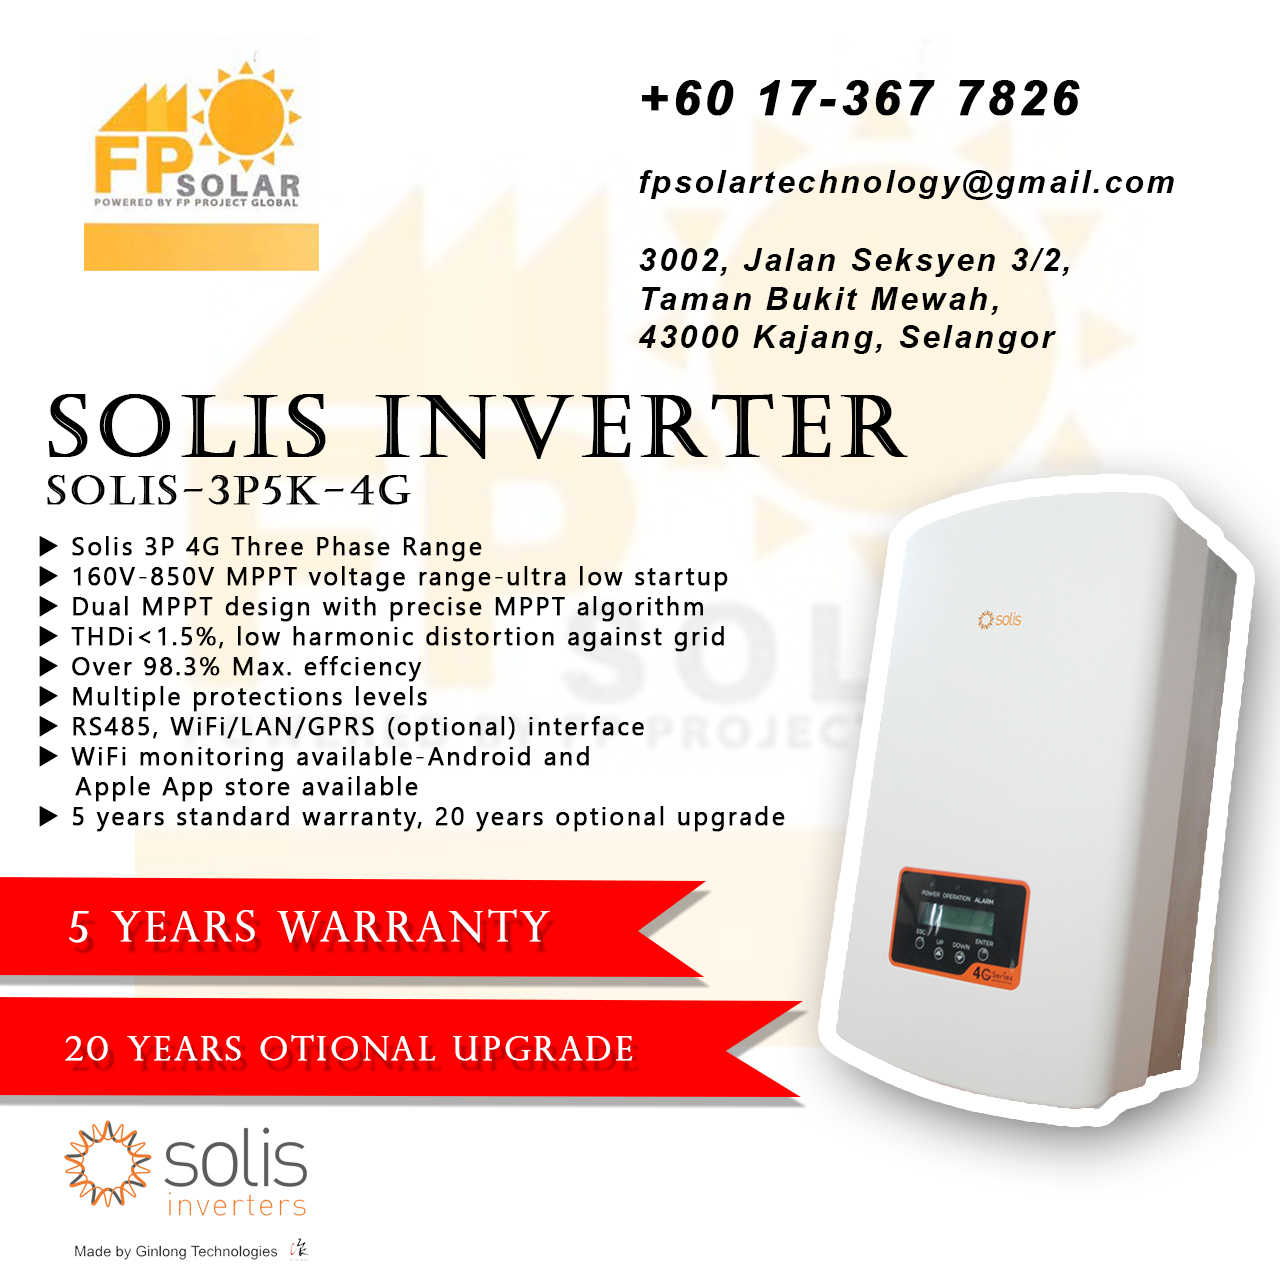 Solis Inverter FPSOLARTECHNOLOGY – FP SOLAR TECHNOLOGY